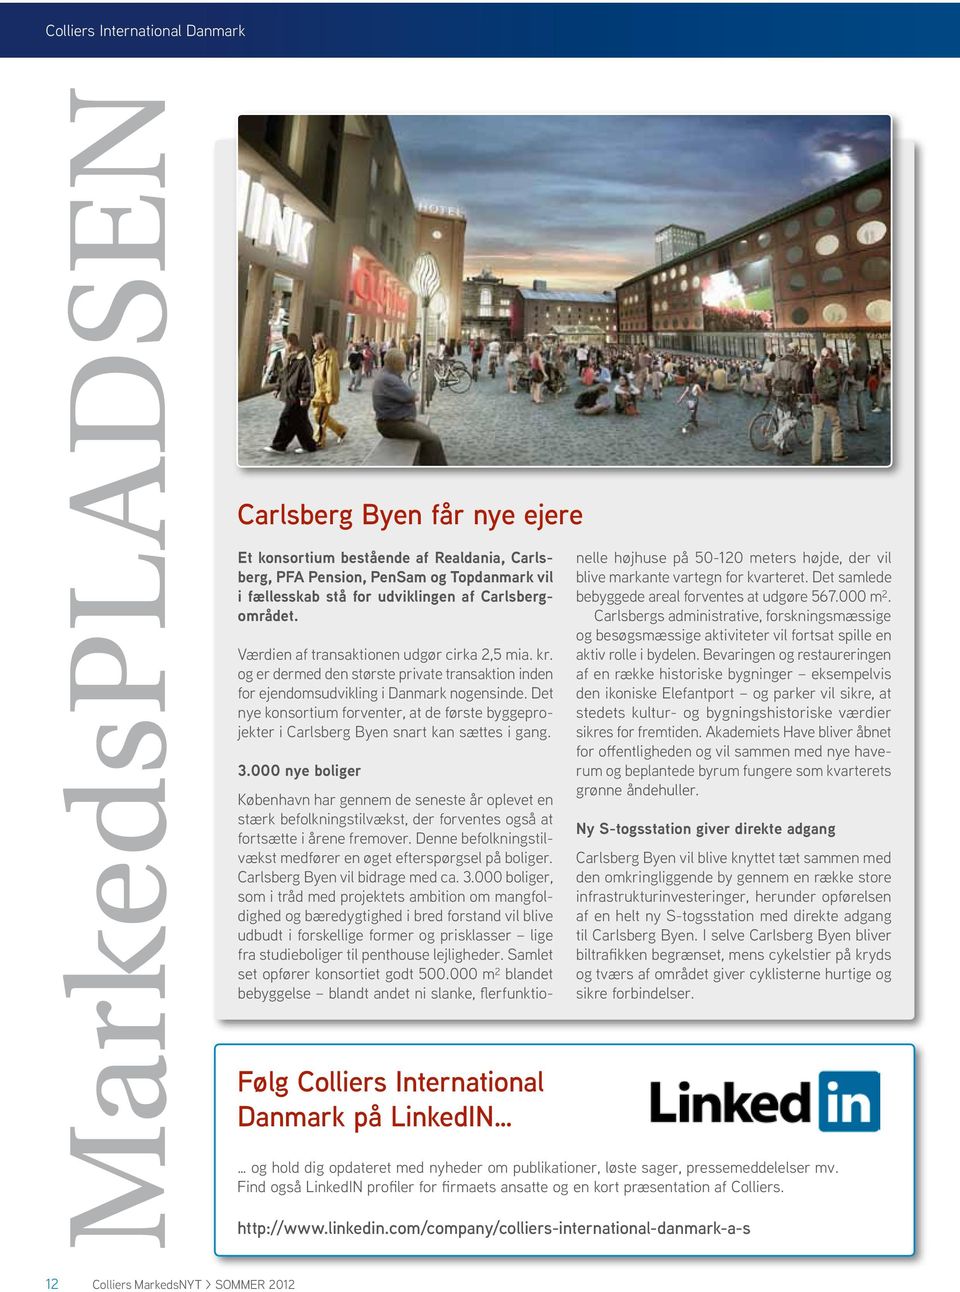 Det nye konsortium forventer, at de første byggeprojekter i Carlsberg Byen snart kan sættes i gang. Følg Colliers International Danmark på LinkedIN 3.